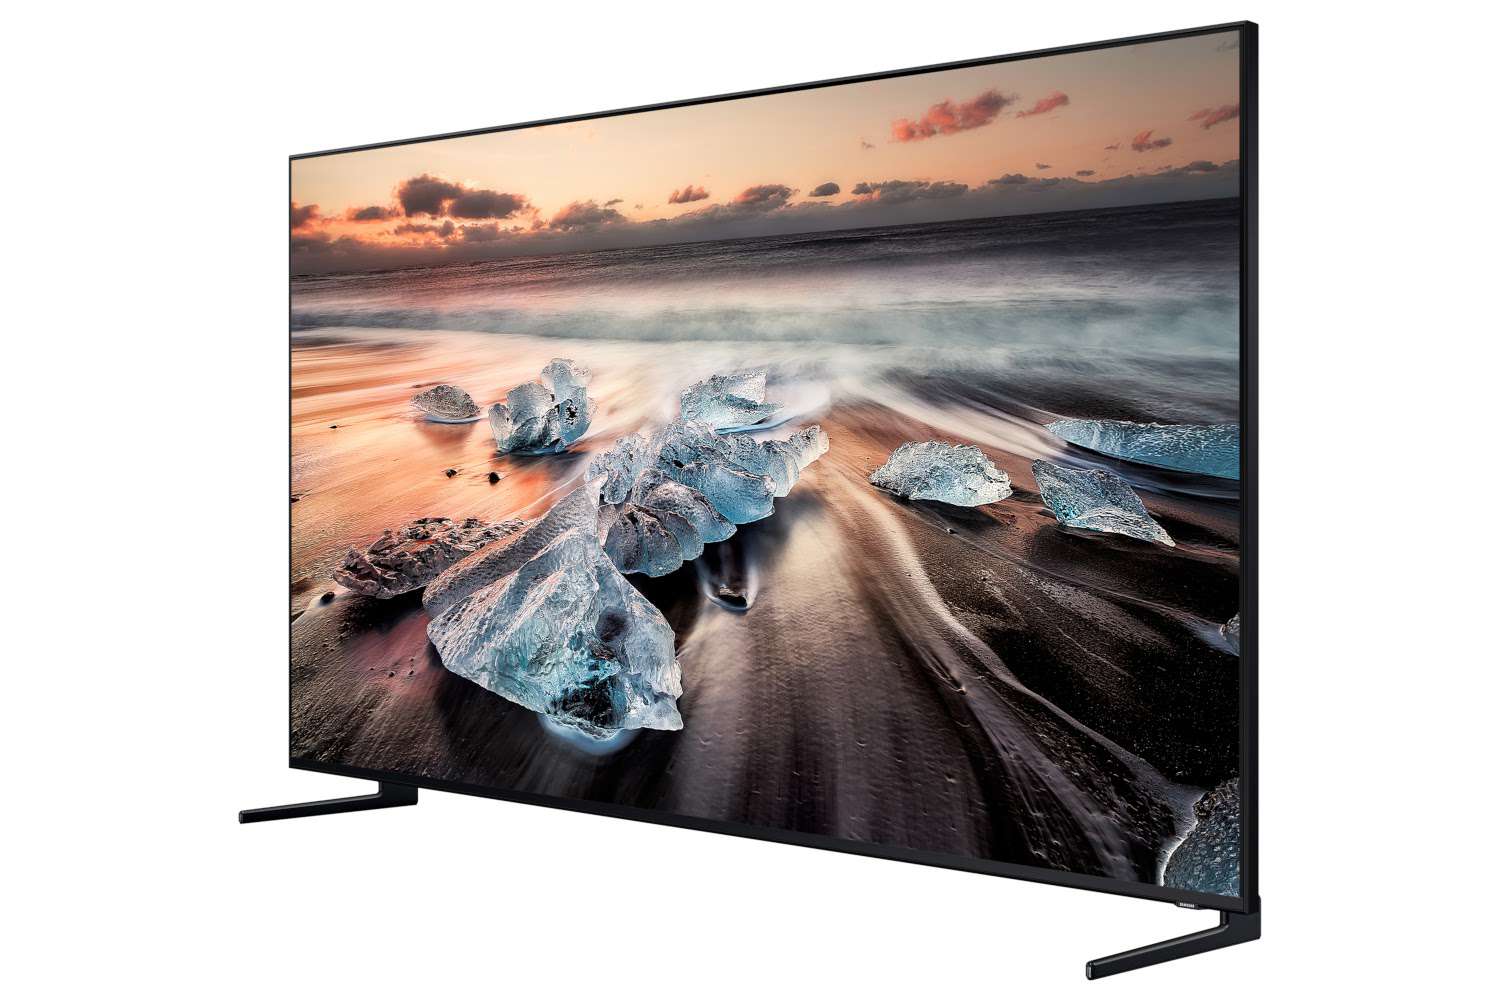 Samsung's QLED 8K TV